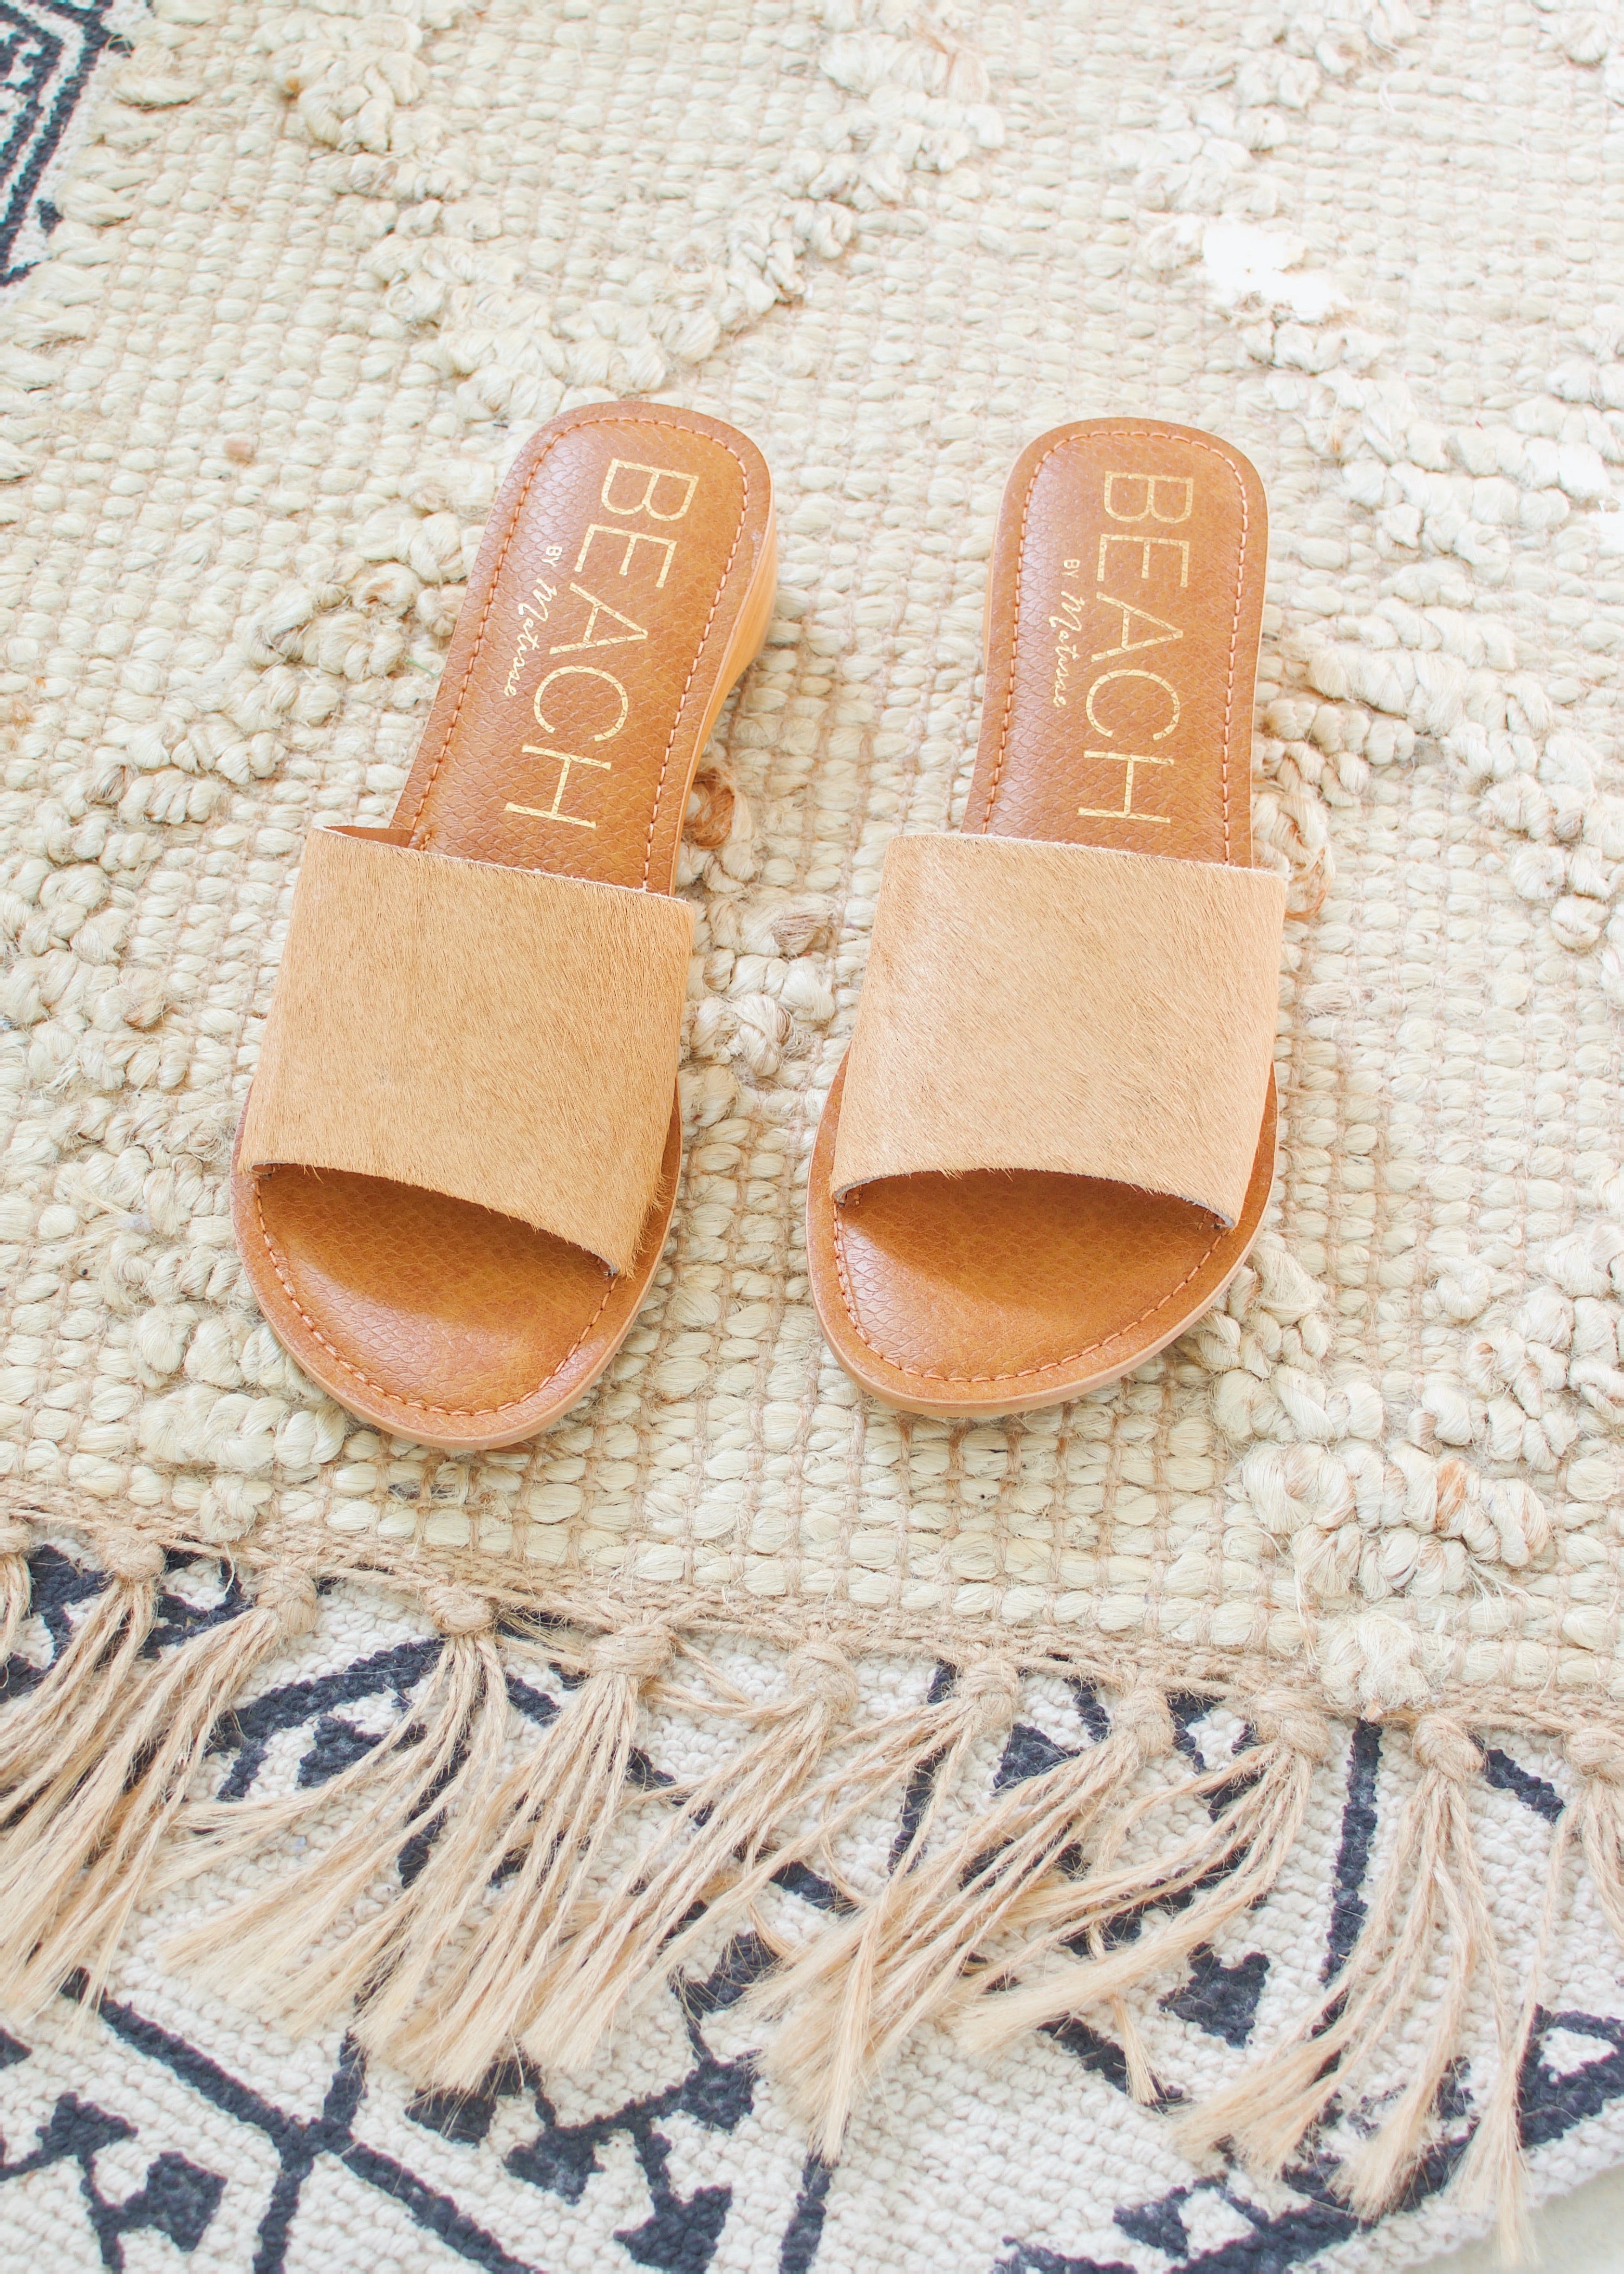 Big Sur Tan Sandals